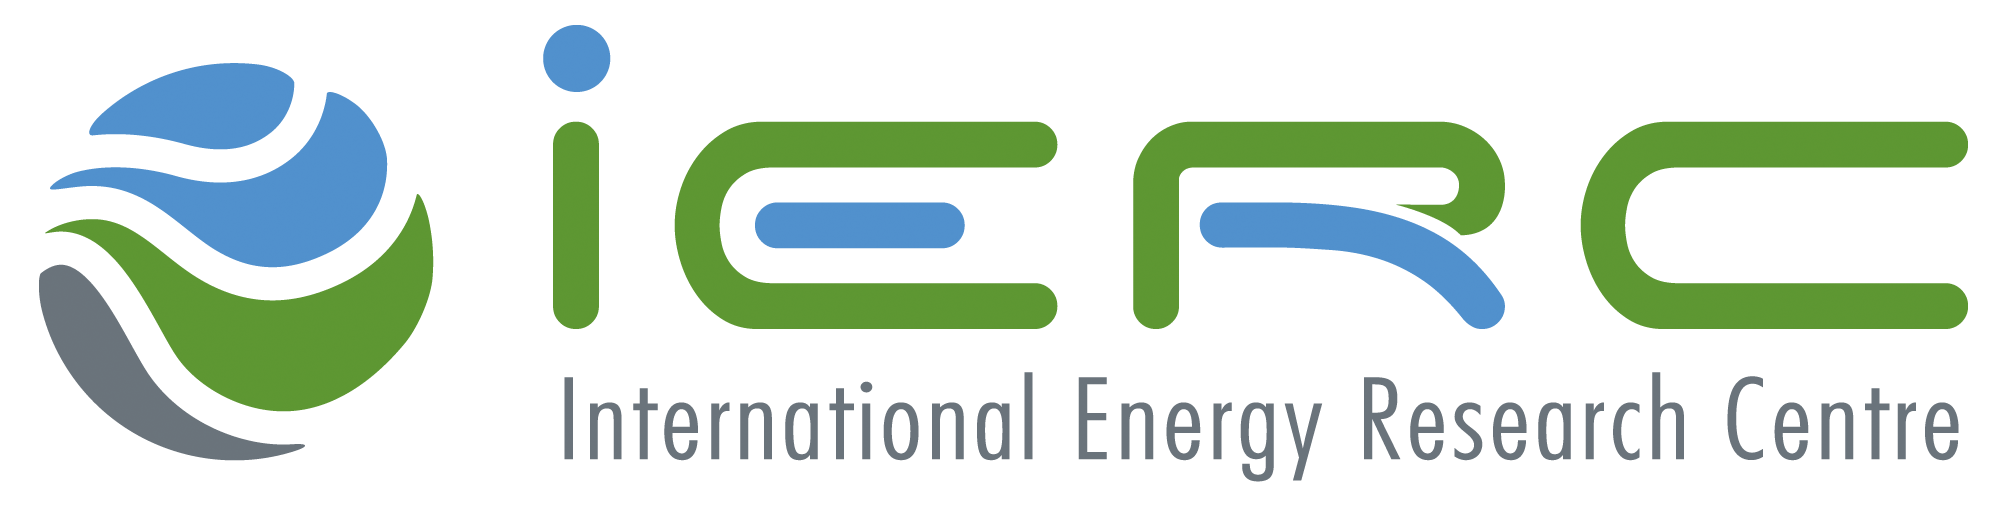 IERC Logo.png